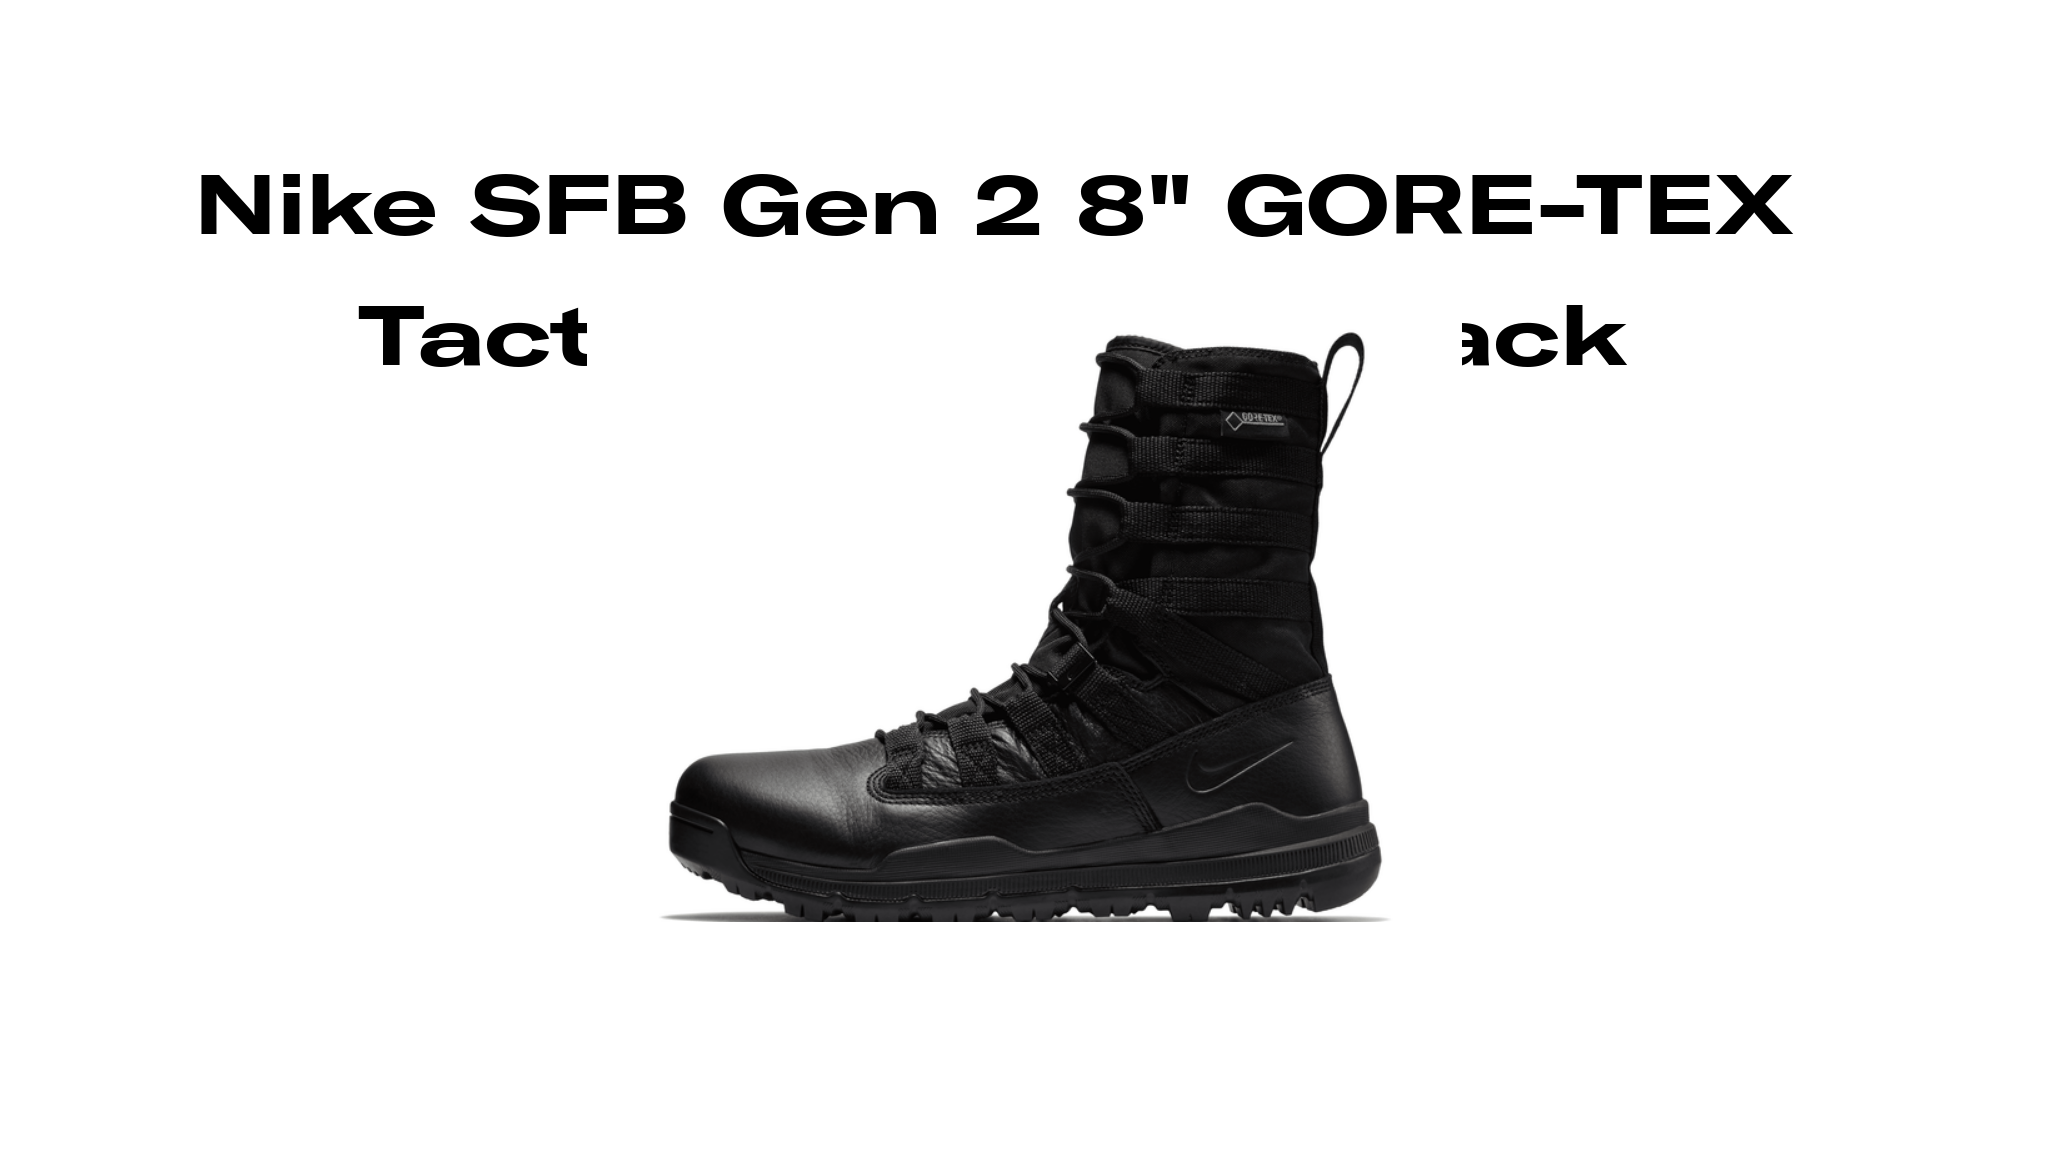 Nike SFB Gen 2 8" GORE-TEX Tactical in Black Release Raffles, and Where